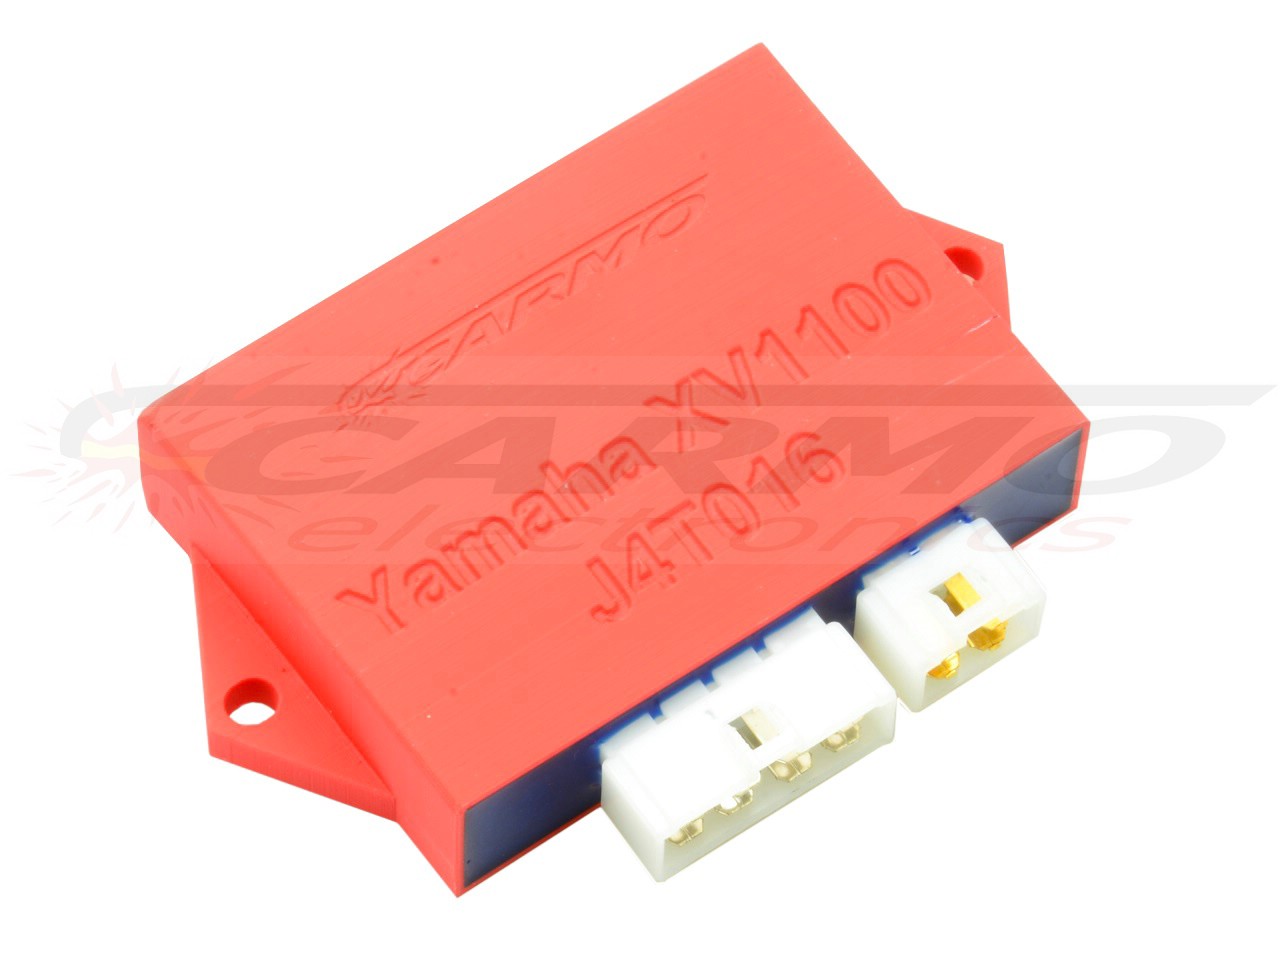 Yamaha XV1100 virago igniter ignition module CDI TCI Box (J4T016, 1TA-82305-20-00) - Clique na Imagem para Fechar